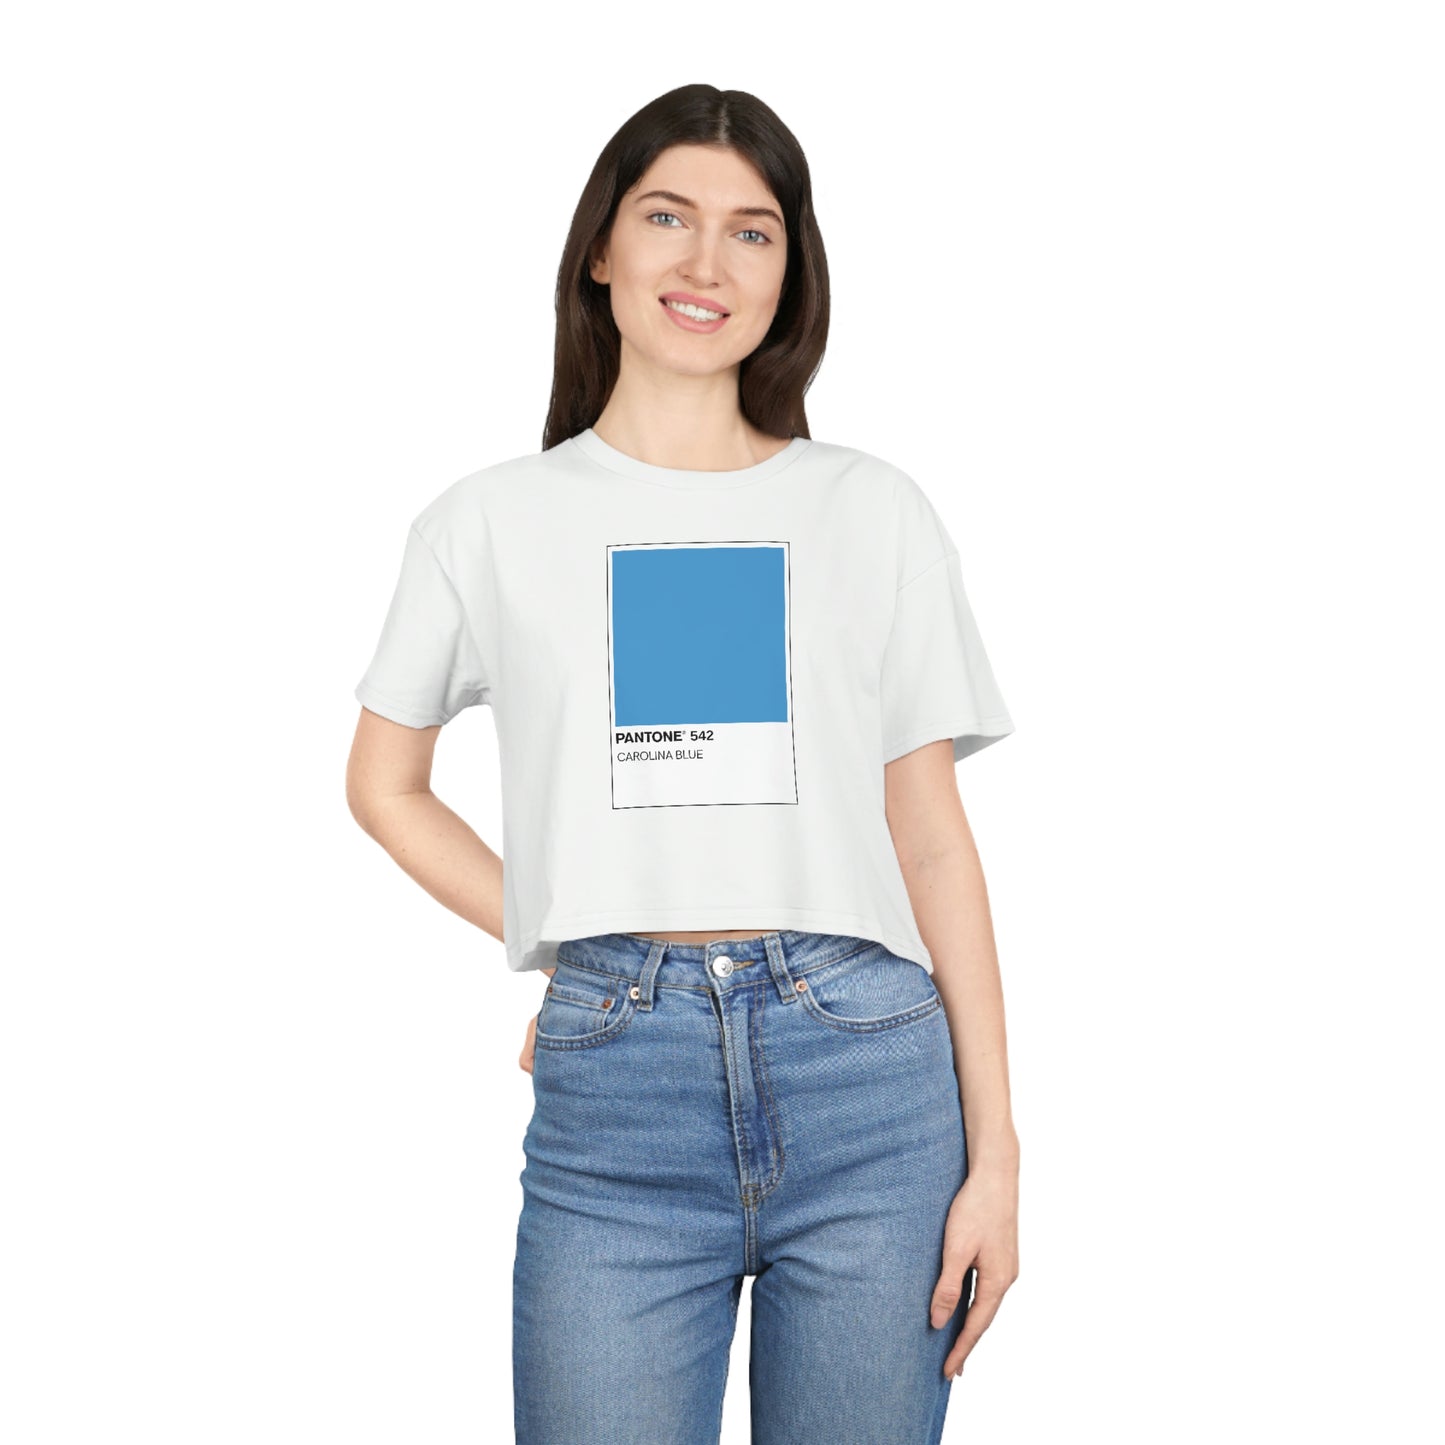 UNC Carolina Blue Pantone 542 Cropped T-Shirt